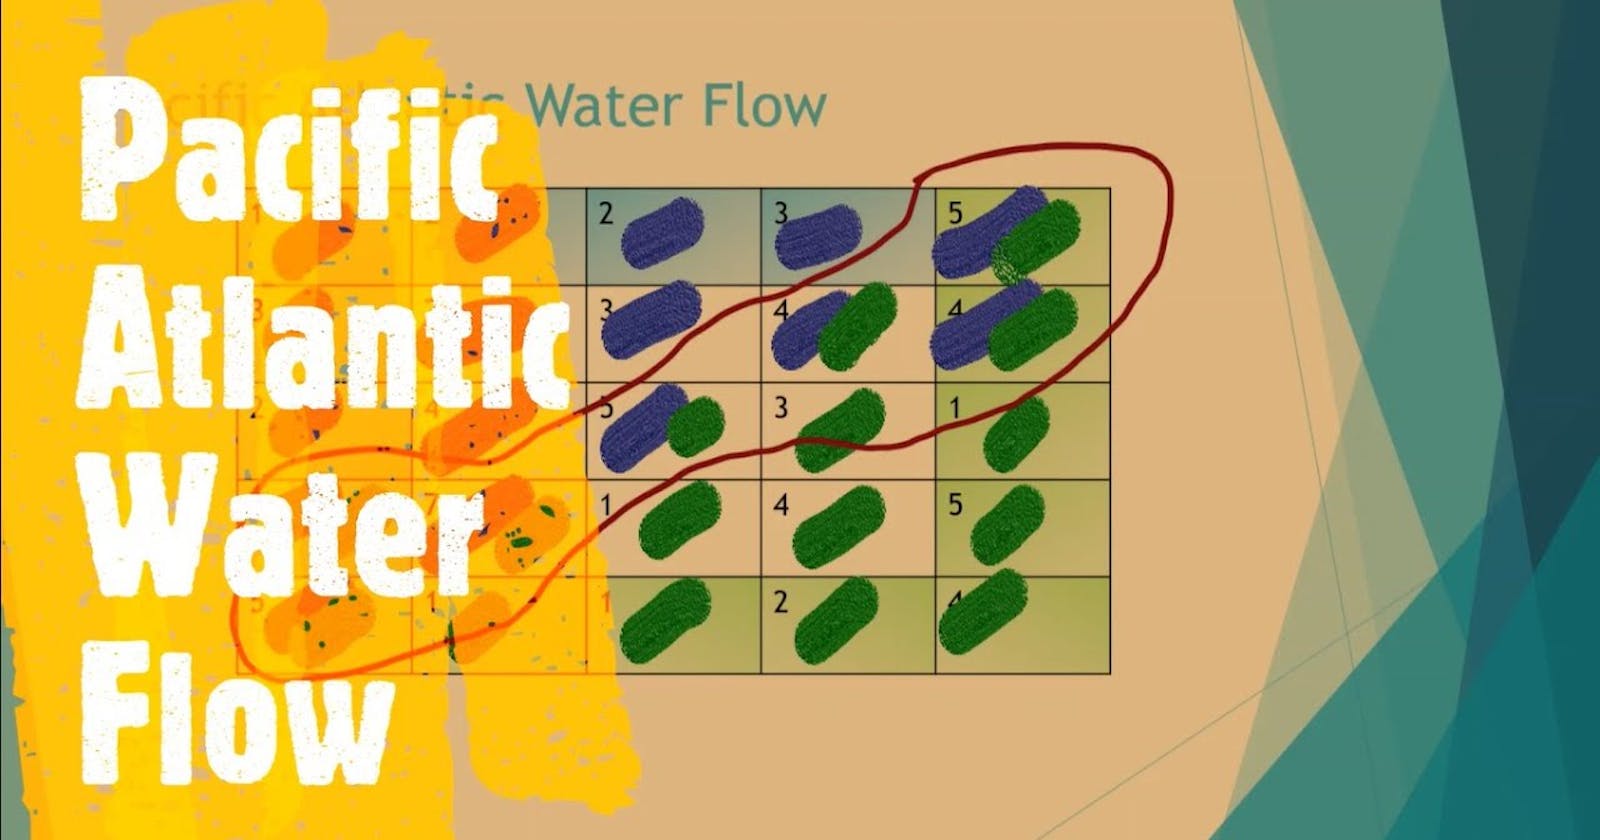 417 Pacific Atlantic Water Flow